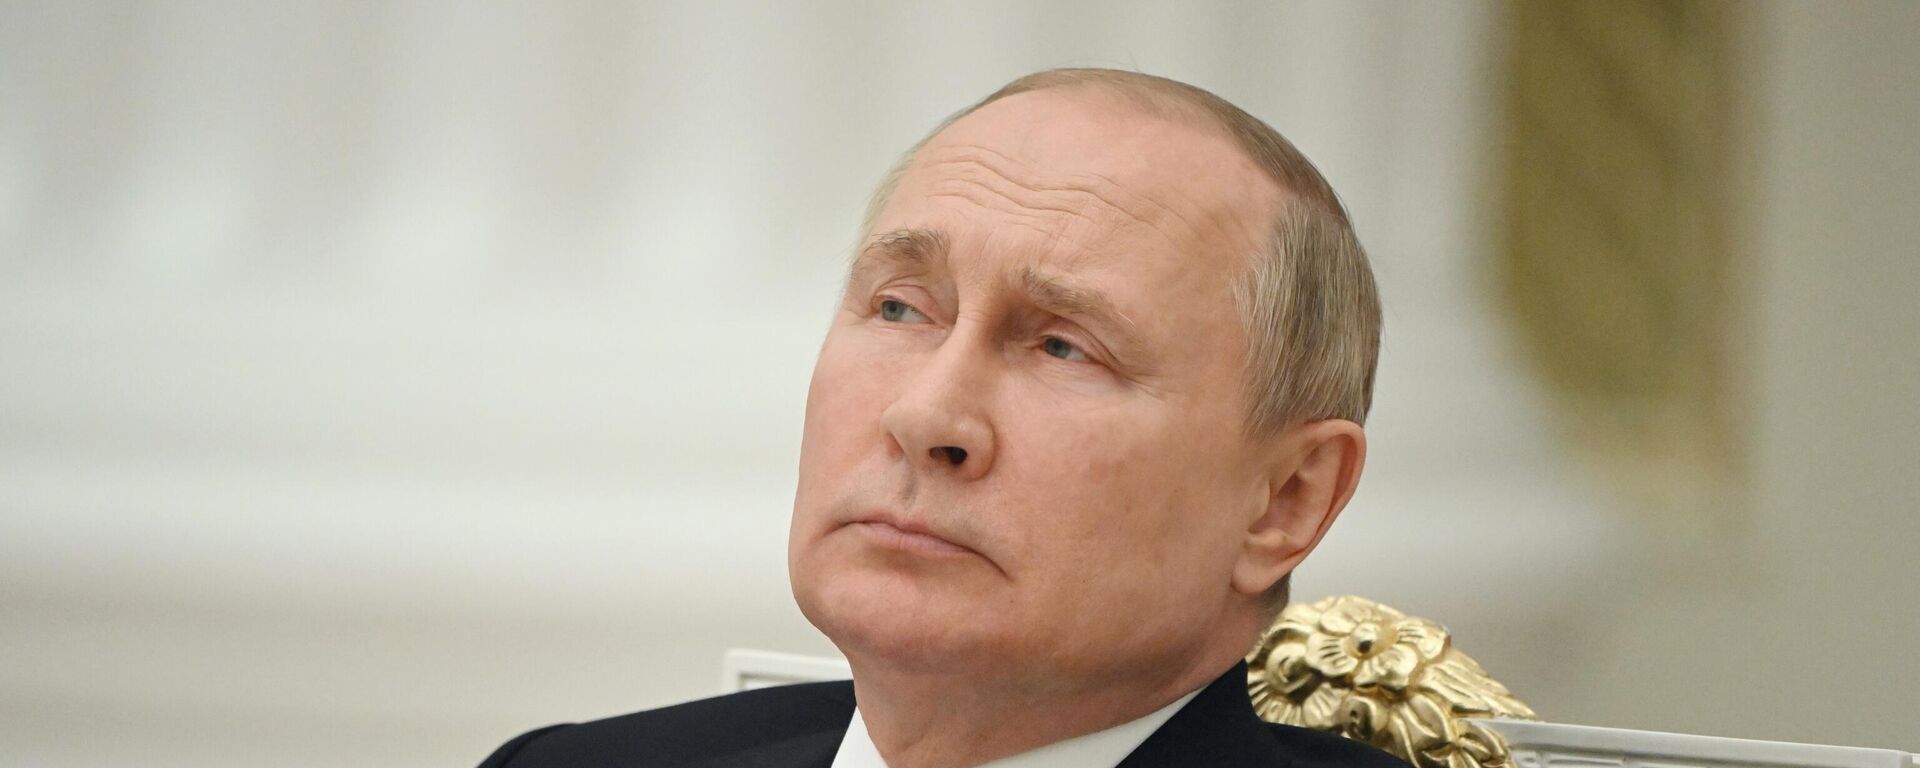 Vladímir Putin, el presidente ruso - Sputnik Mundo, 1920, 25.05.2022